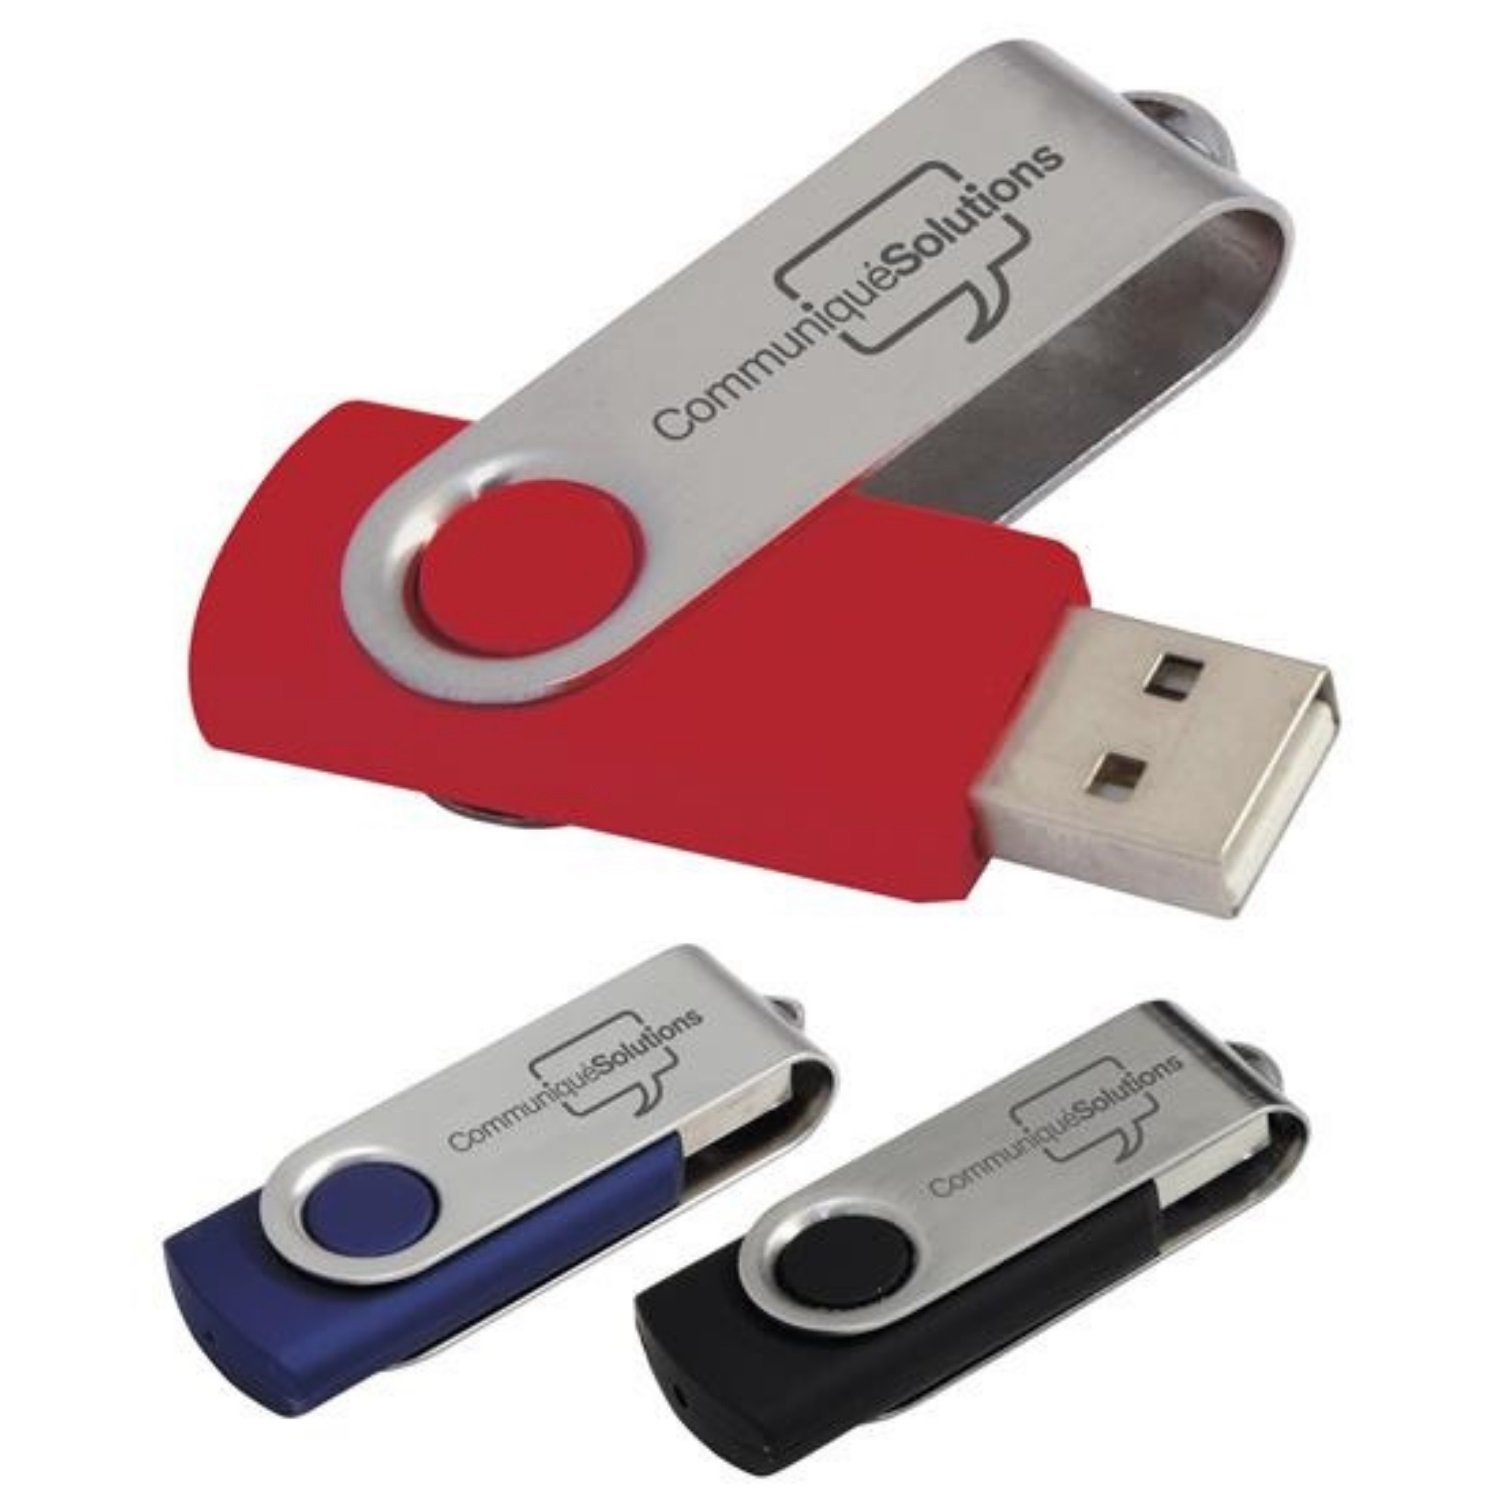 USB Flash Drive/Memory Sticks